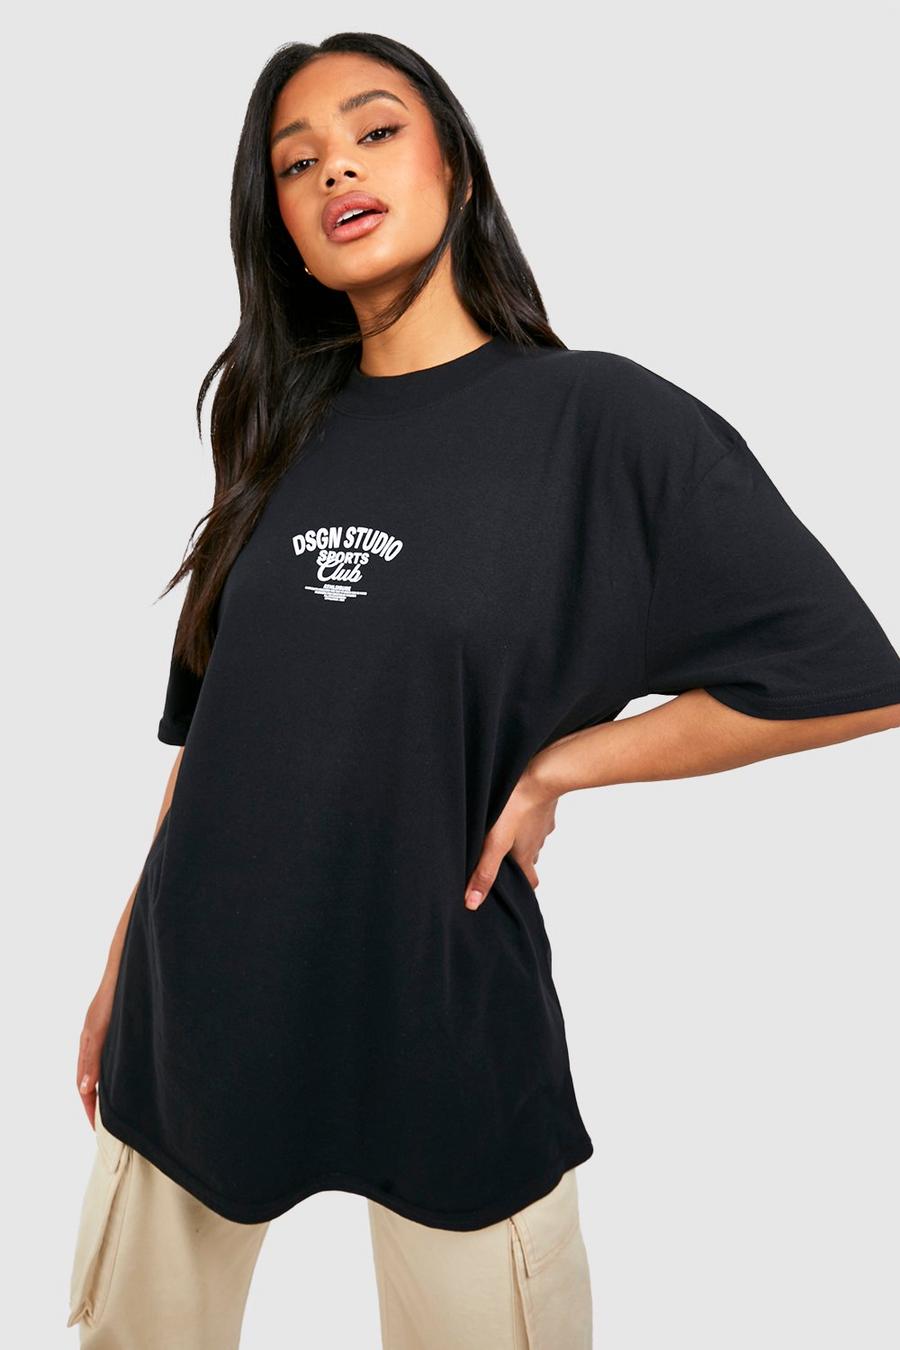 Black noir Dsgn Studio Sports Club Slogan Oversized T-shirt 